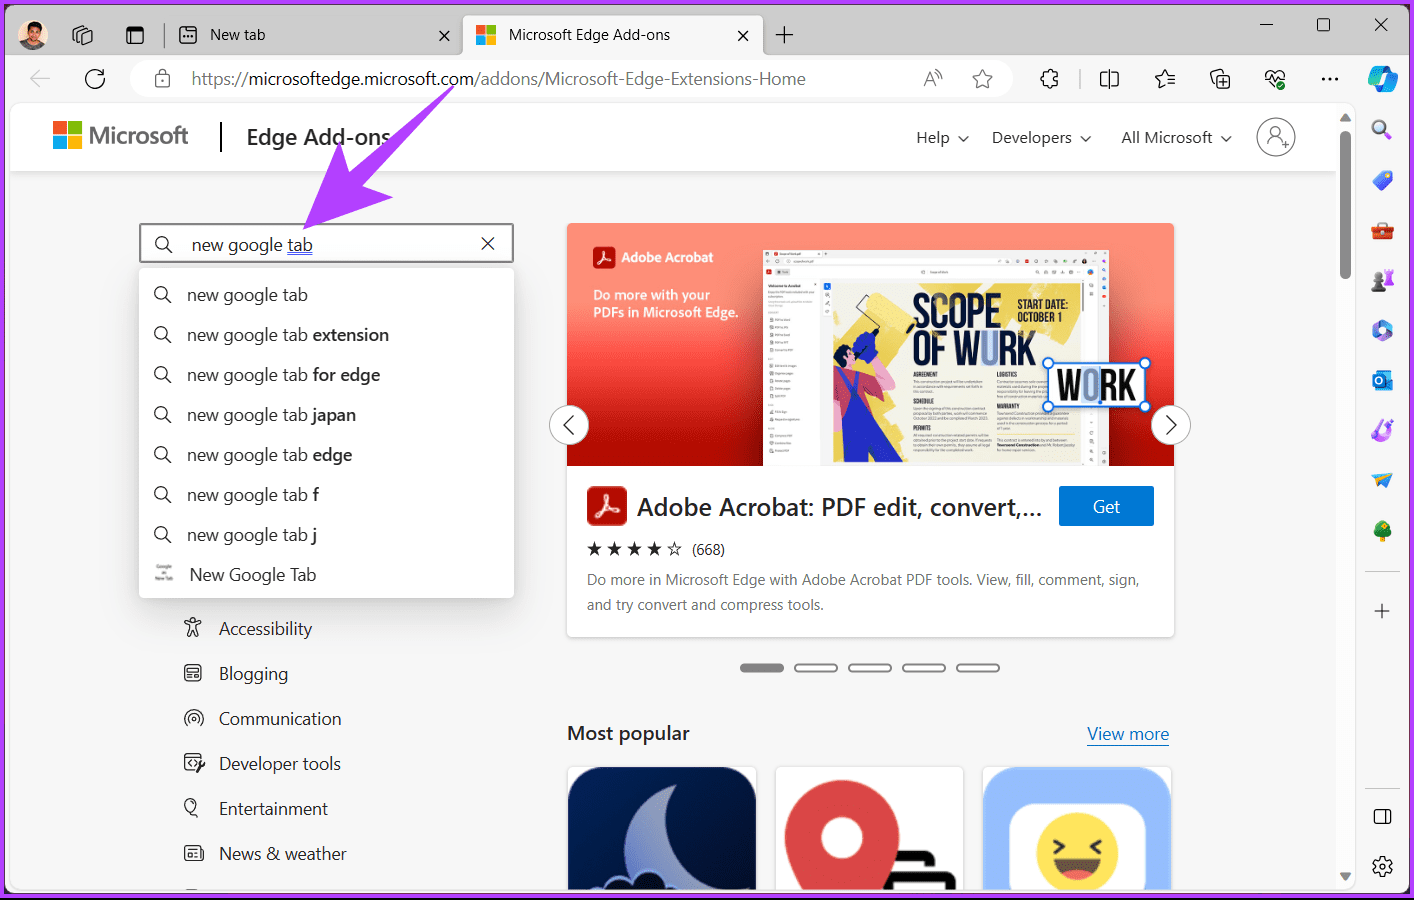 type 'New Google Tab'